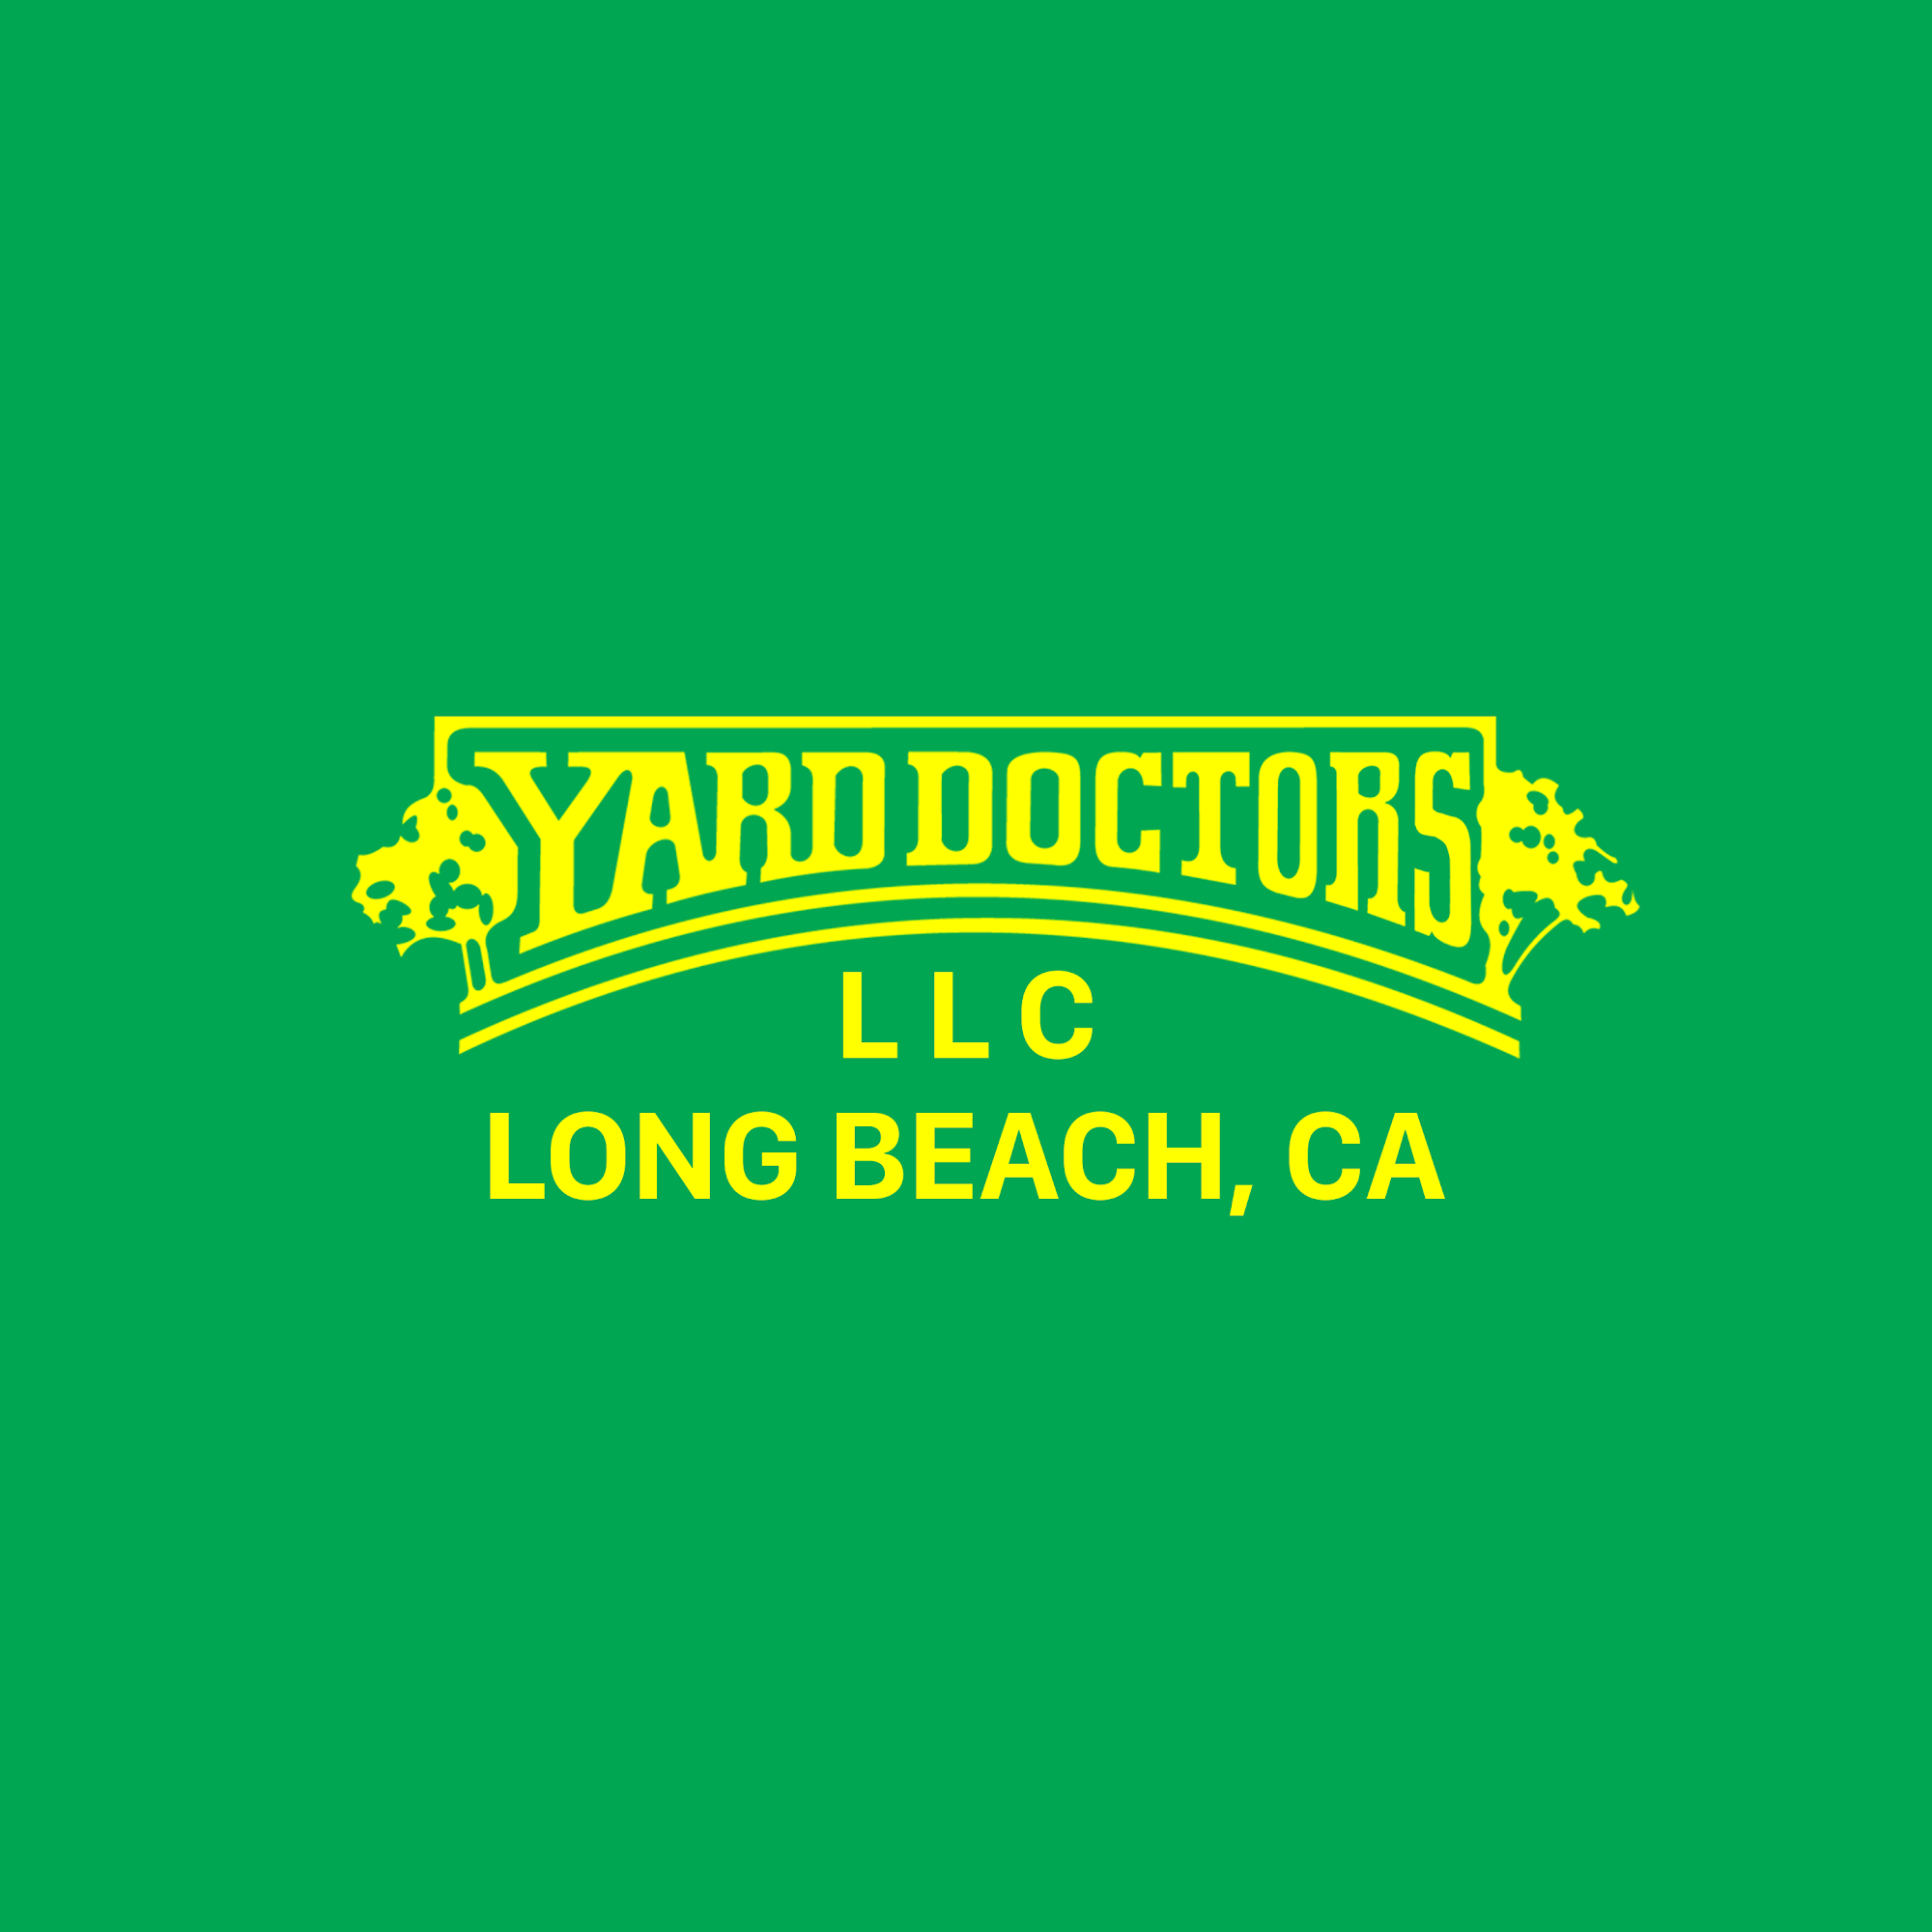 Yard Doctors LLC